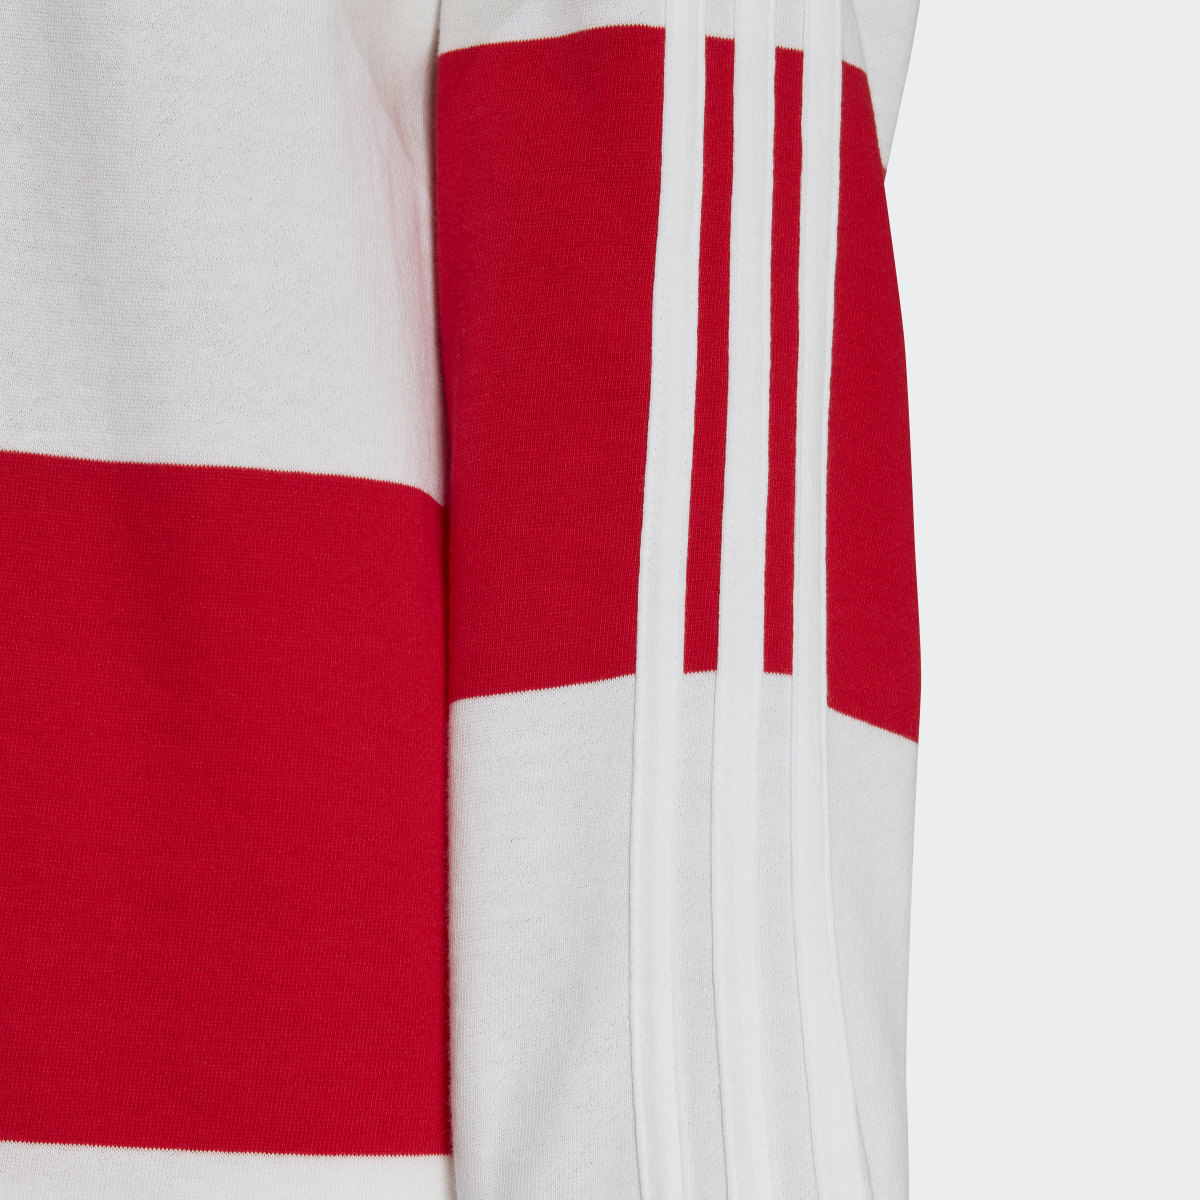 Adidas Striped Long Sleeve Sweatshirt. 7